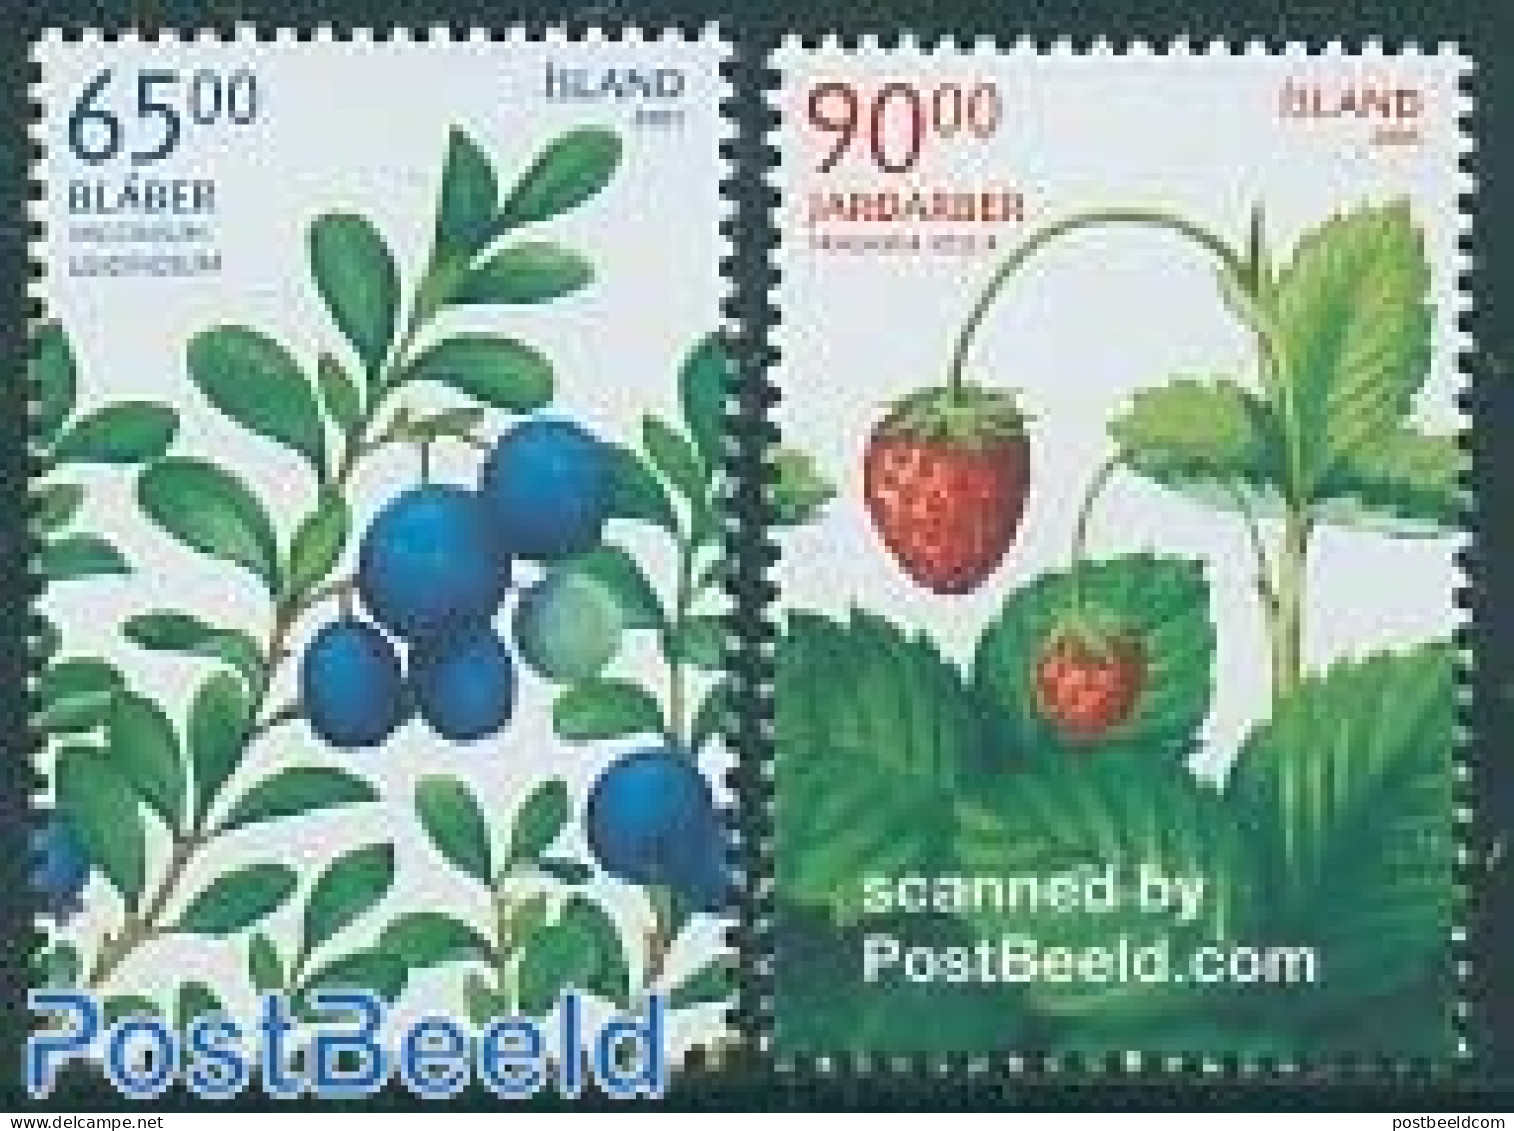 Iceland 2005 Wild Berries 2v, Mint NH, Nature - Fruit - Ongebruikt